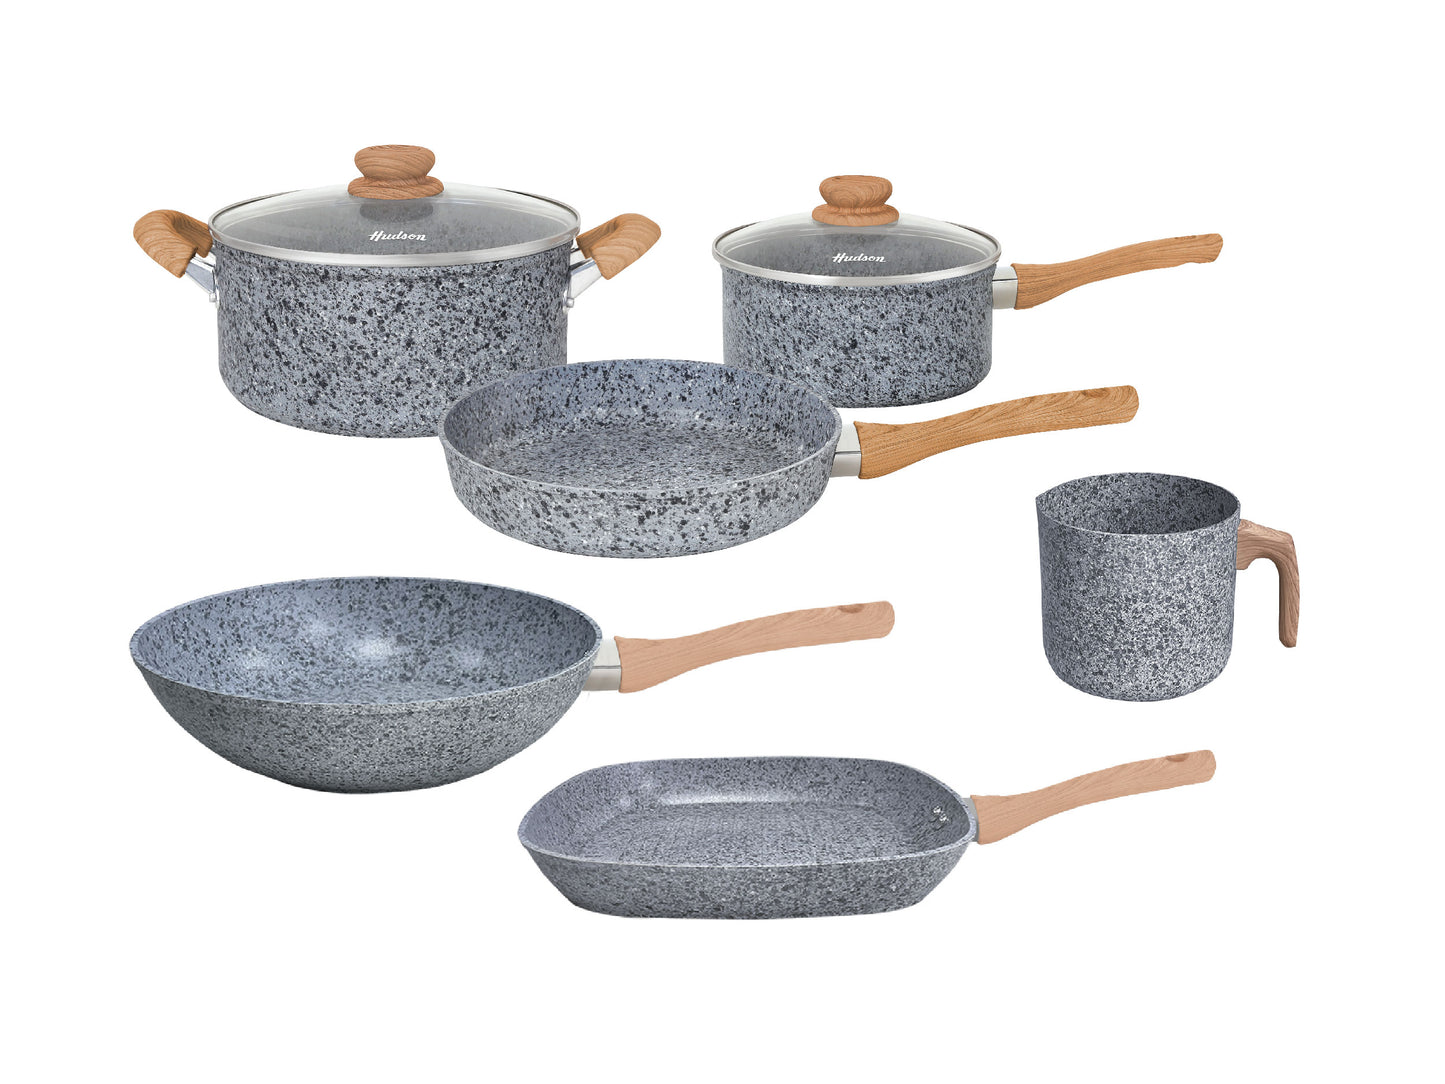 HUDSON Forged Aluminun Cookware Set + Wok + Griddle + Milk Pot